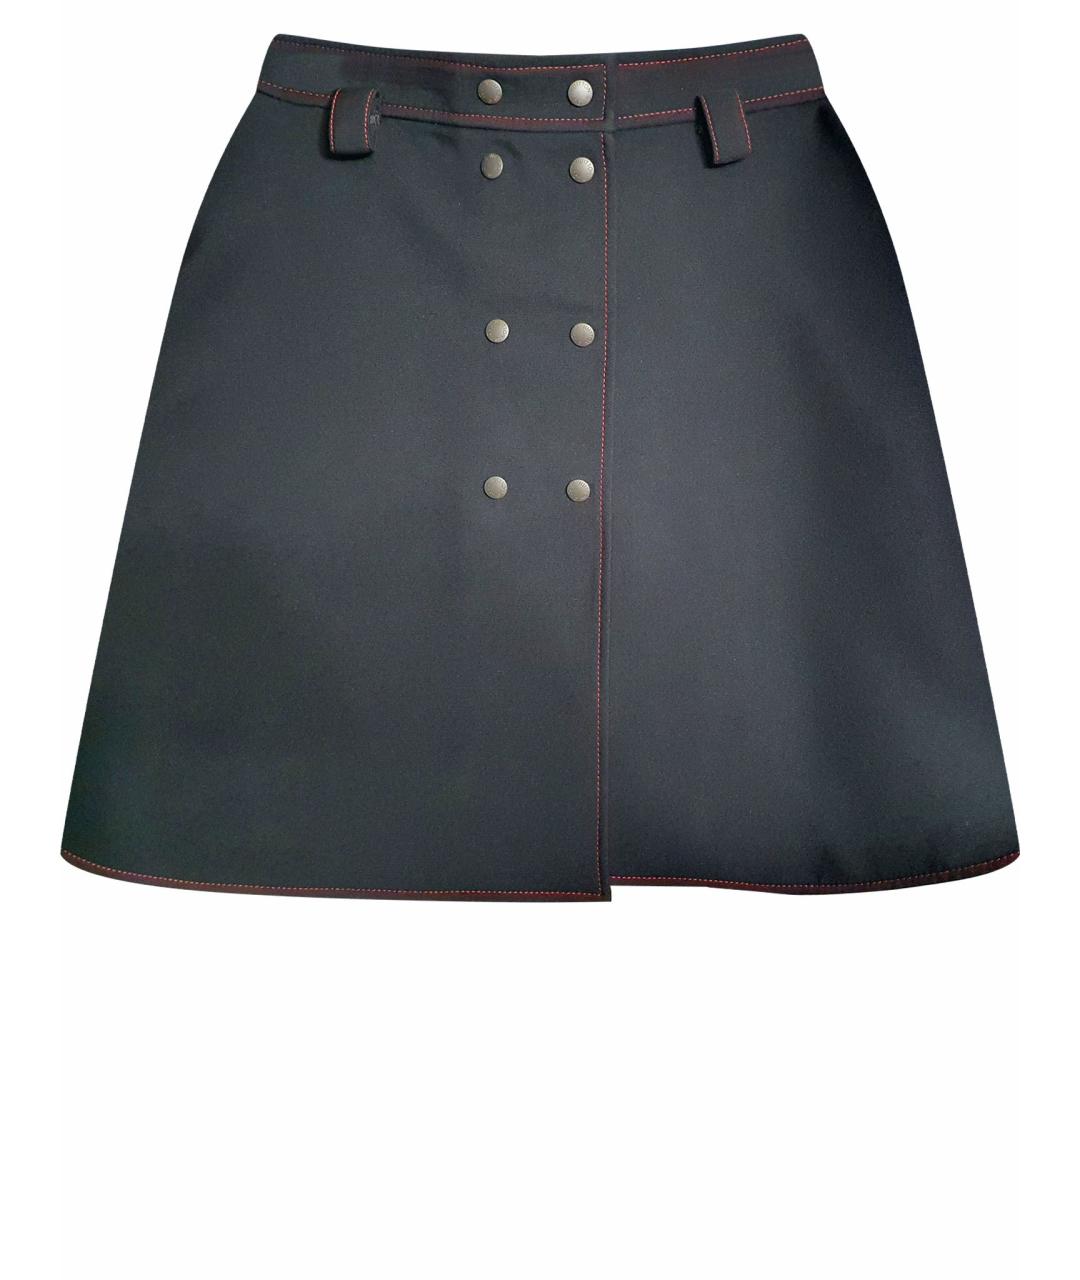 LOUIS VUITTON PRE-OWNED Черная полиэстеровая юбка миди, фото 1